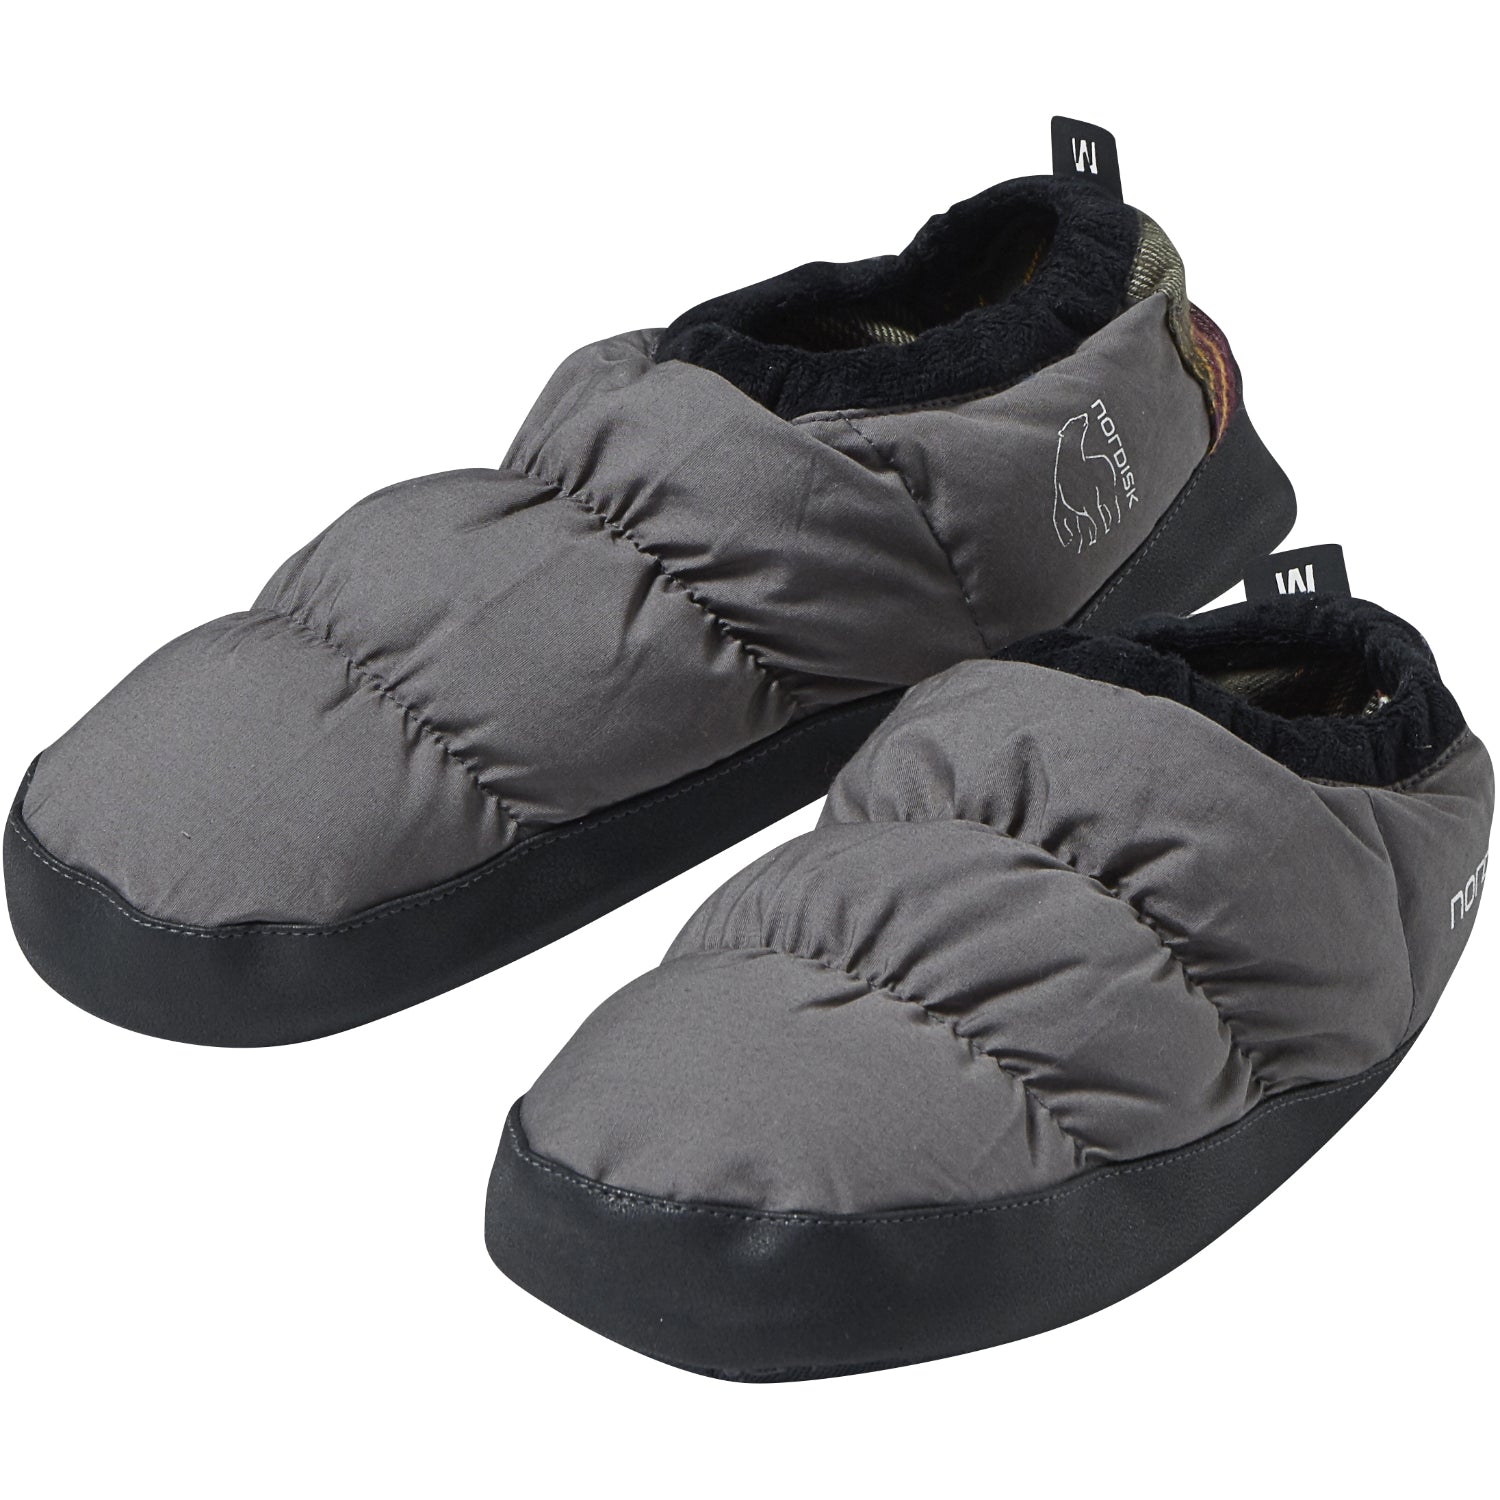 Nordisk Hermod Down Shoe in grey